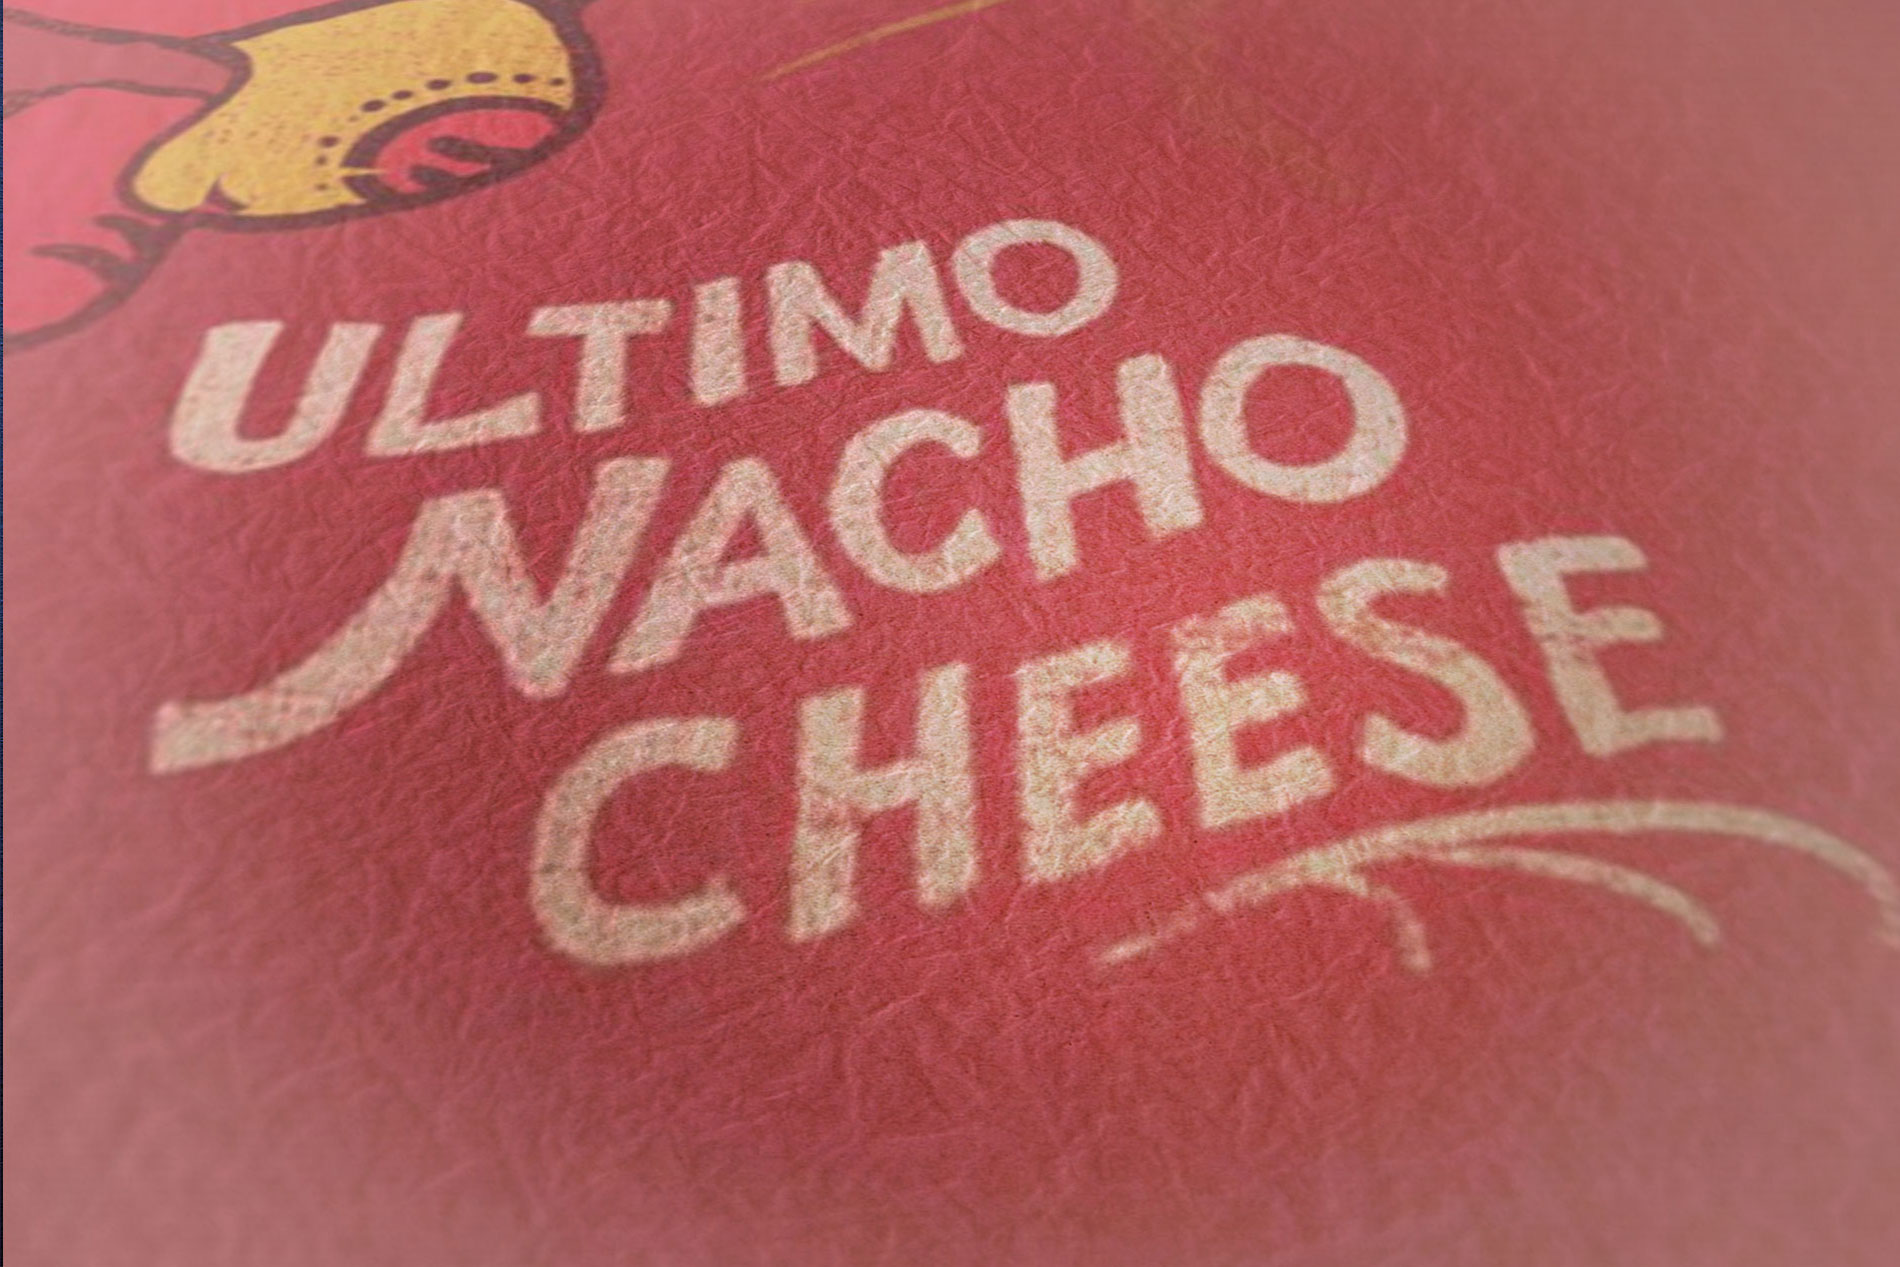 ultimo nacho cheese